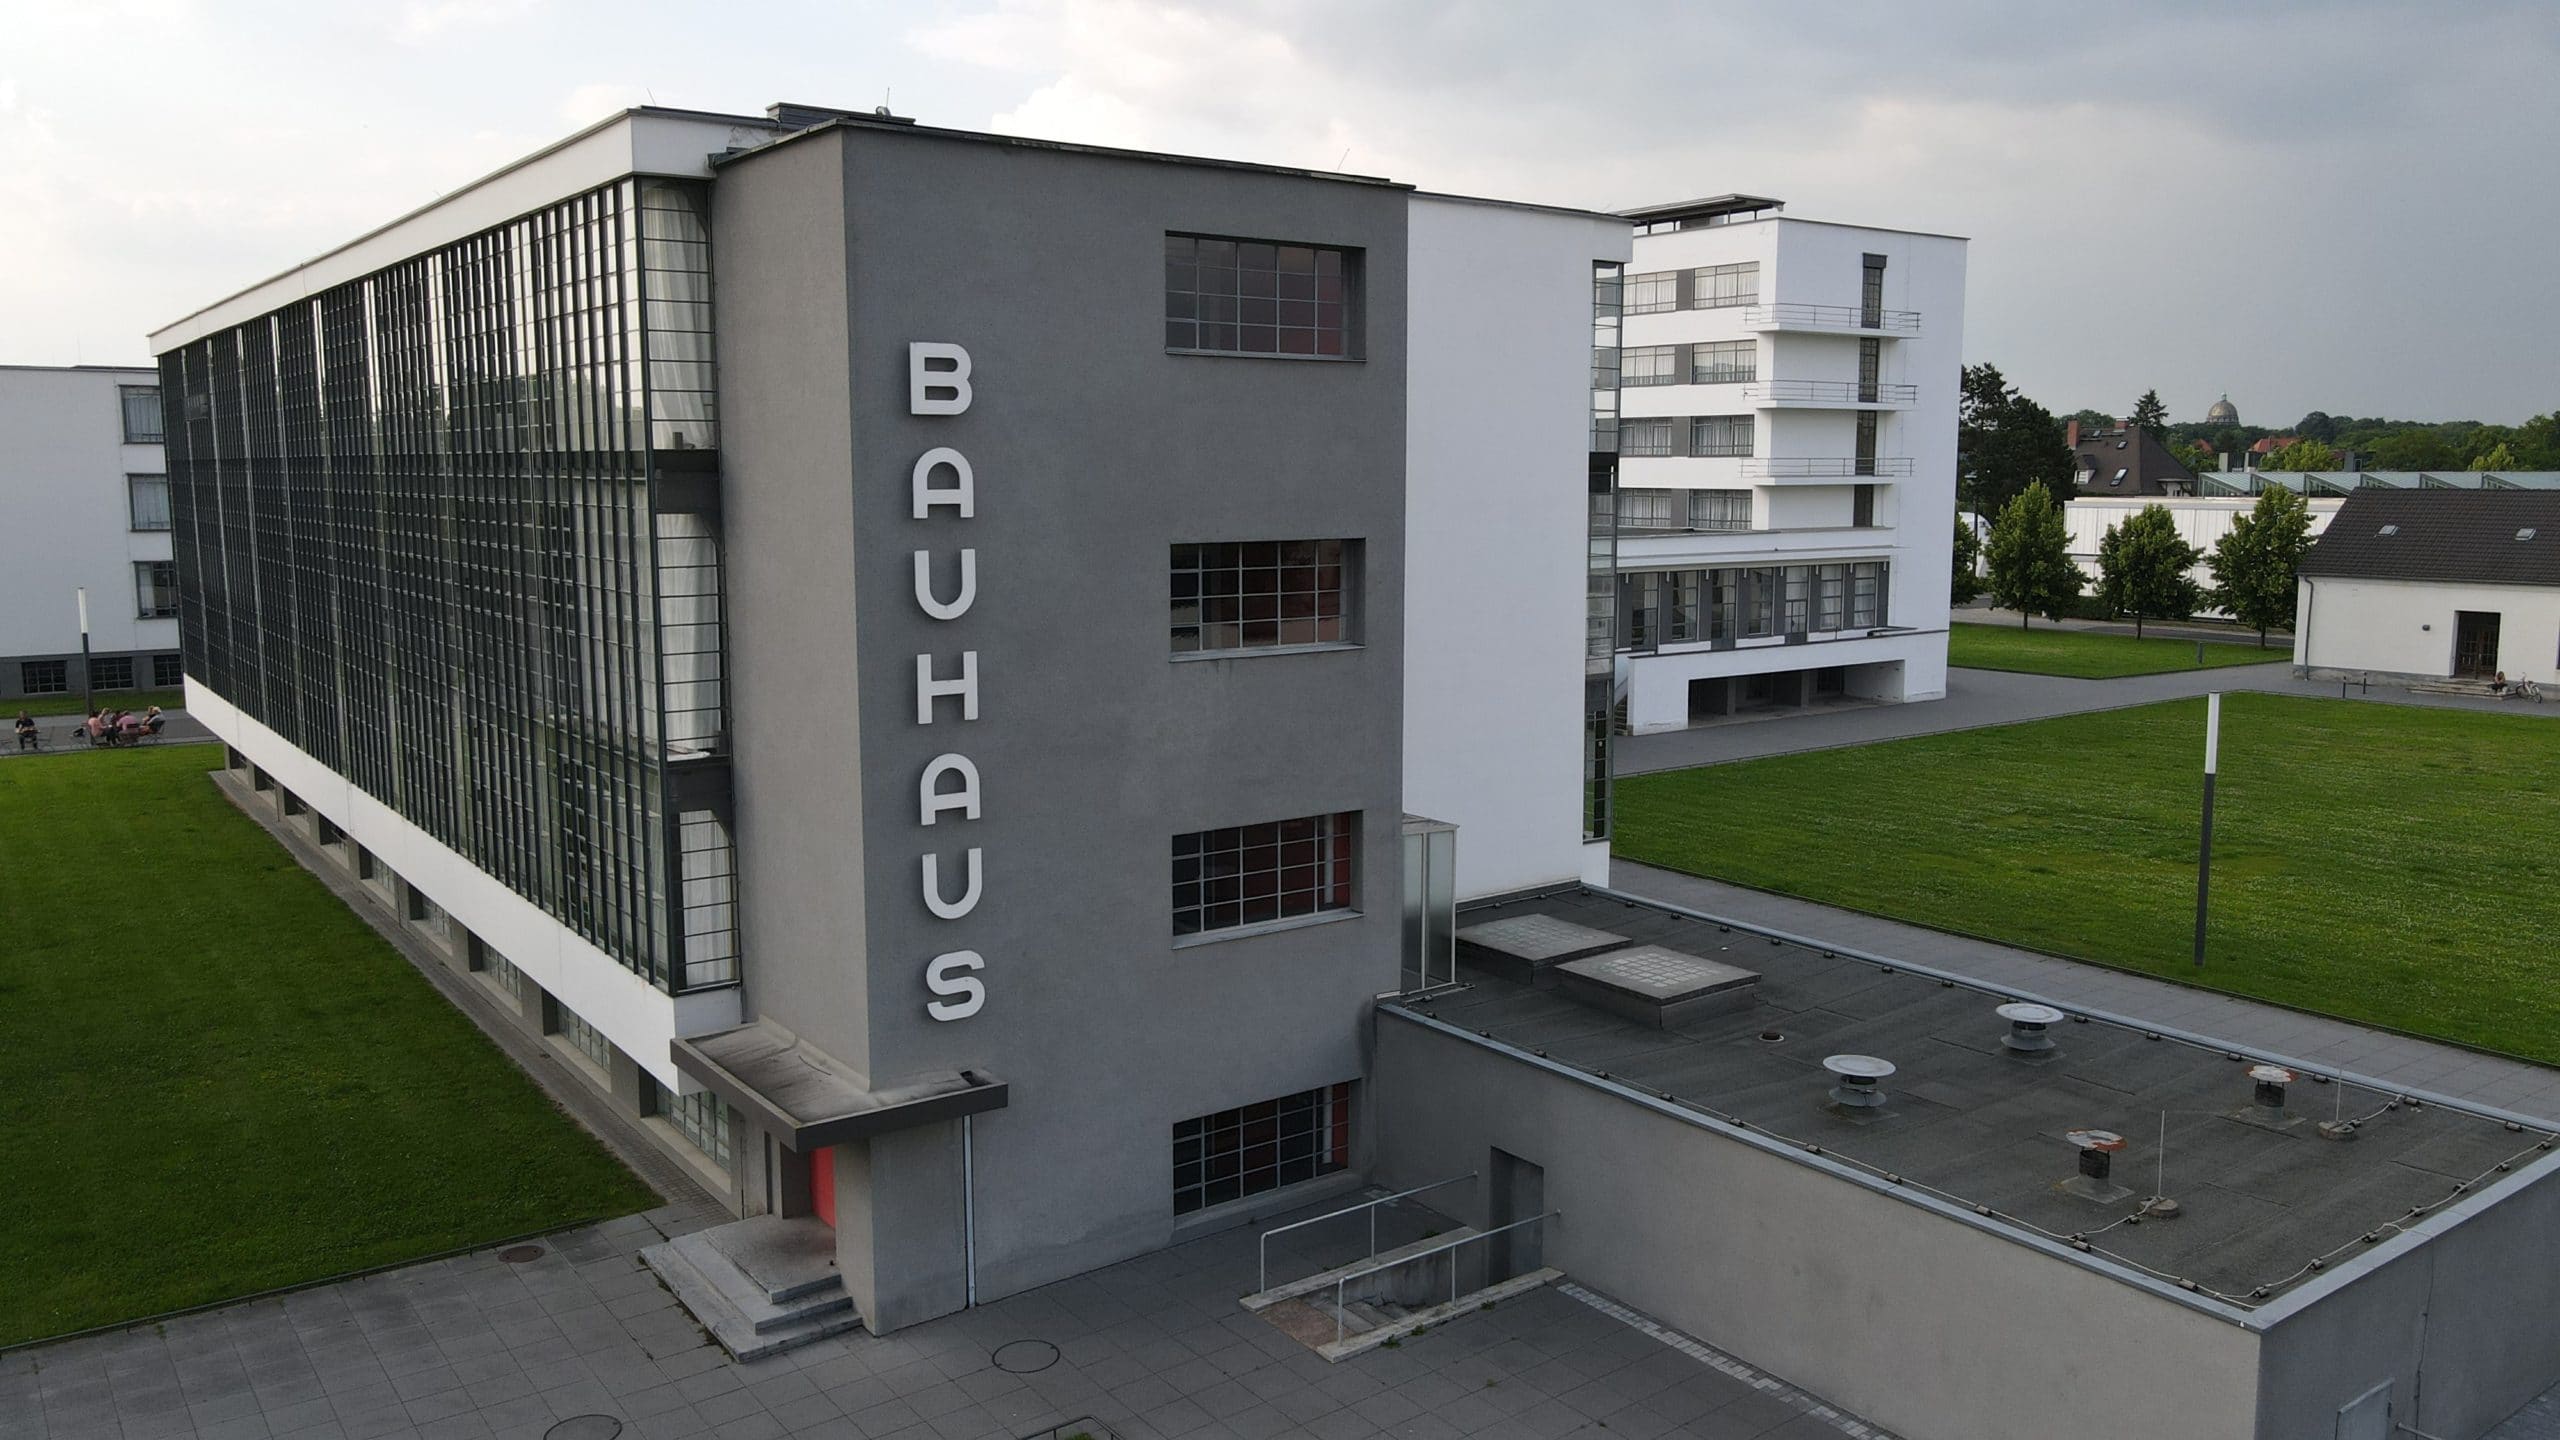 The Bauhaus - School of Design